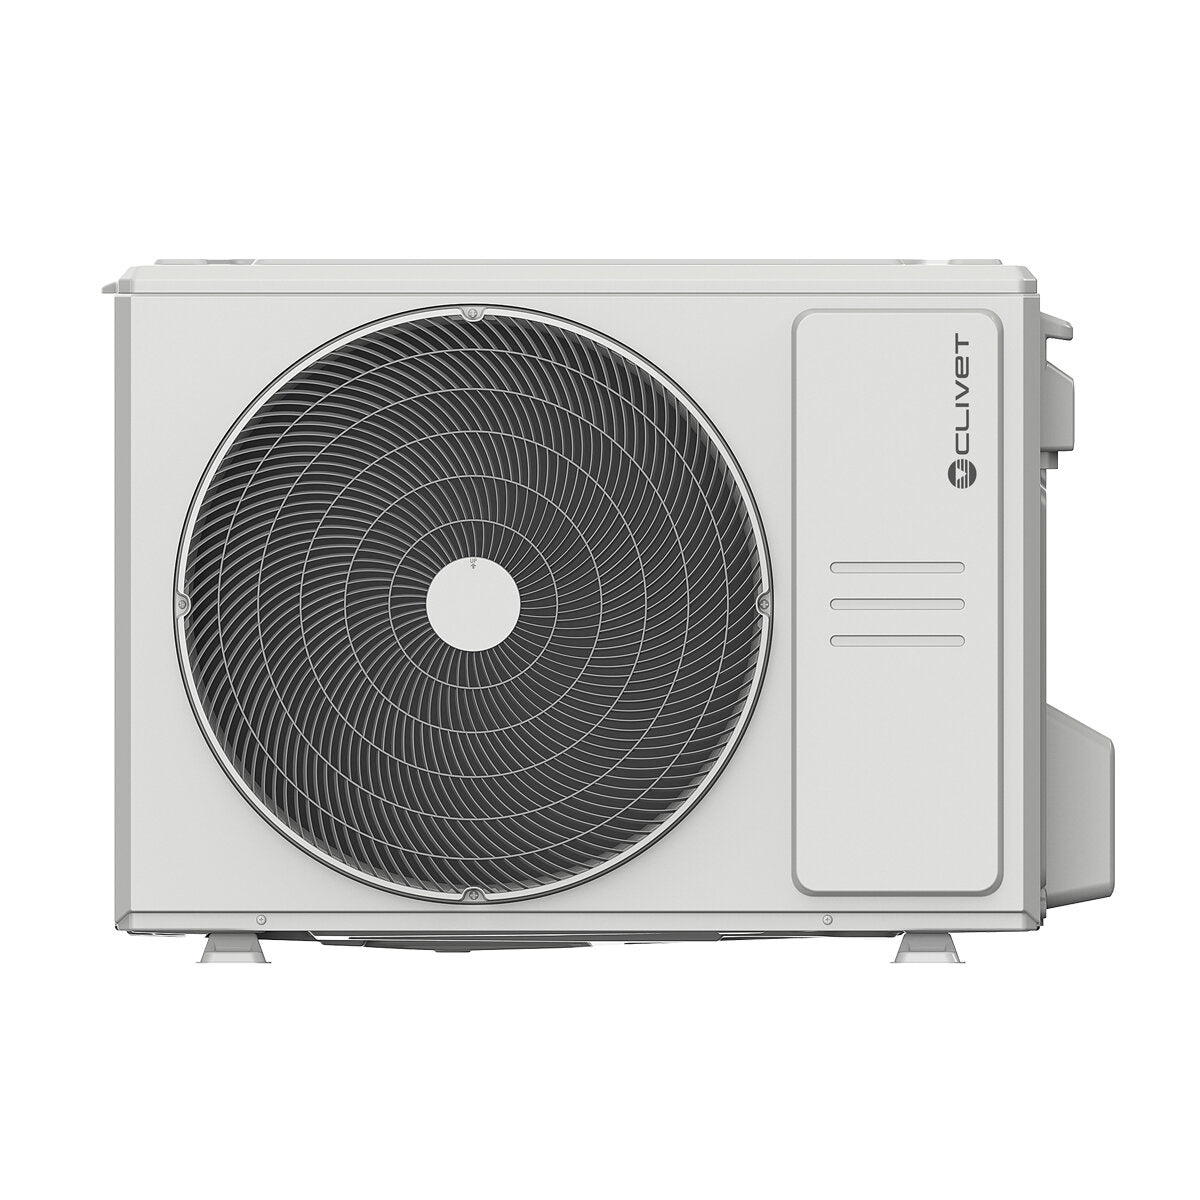 Clivet EZCool trial split air conditioner 9000+9000+12000 BTU inverter A++ external unit 6.2 kW